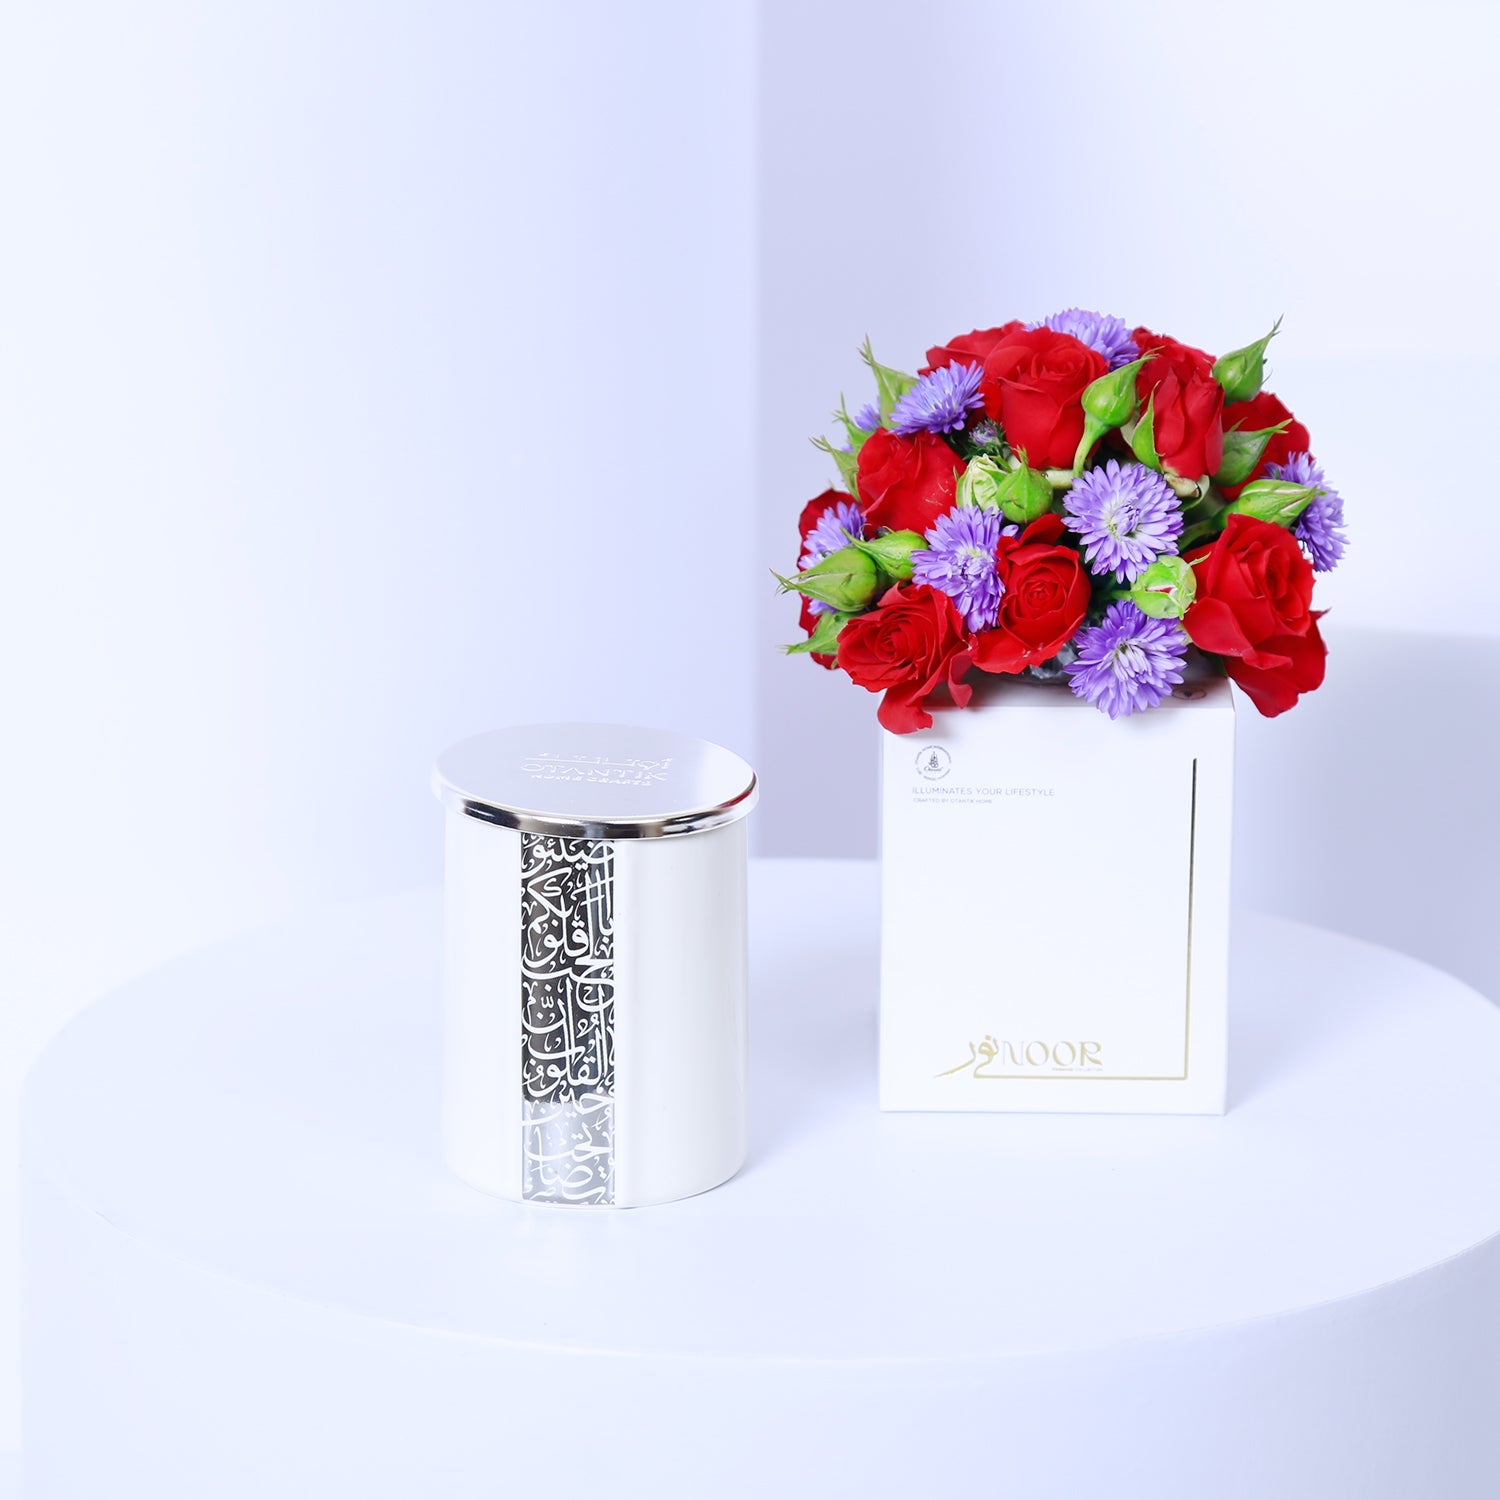 Vanilla Tone Luxury Candle with Flowers Arrangement